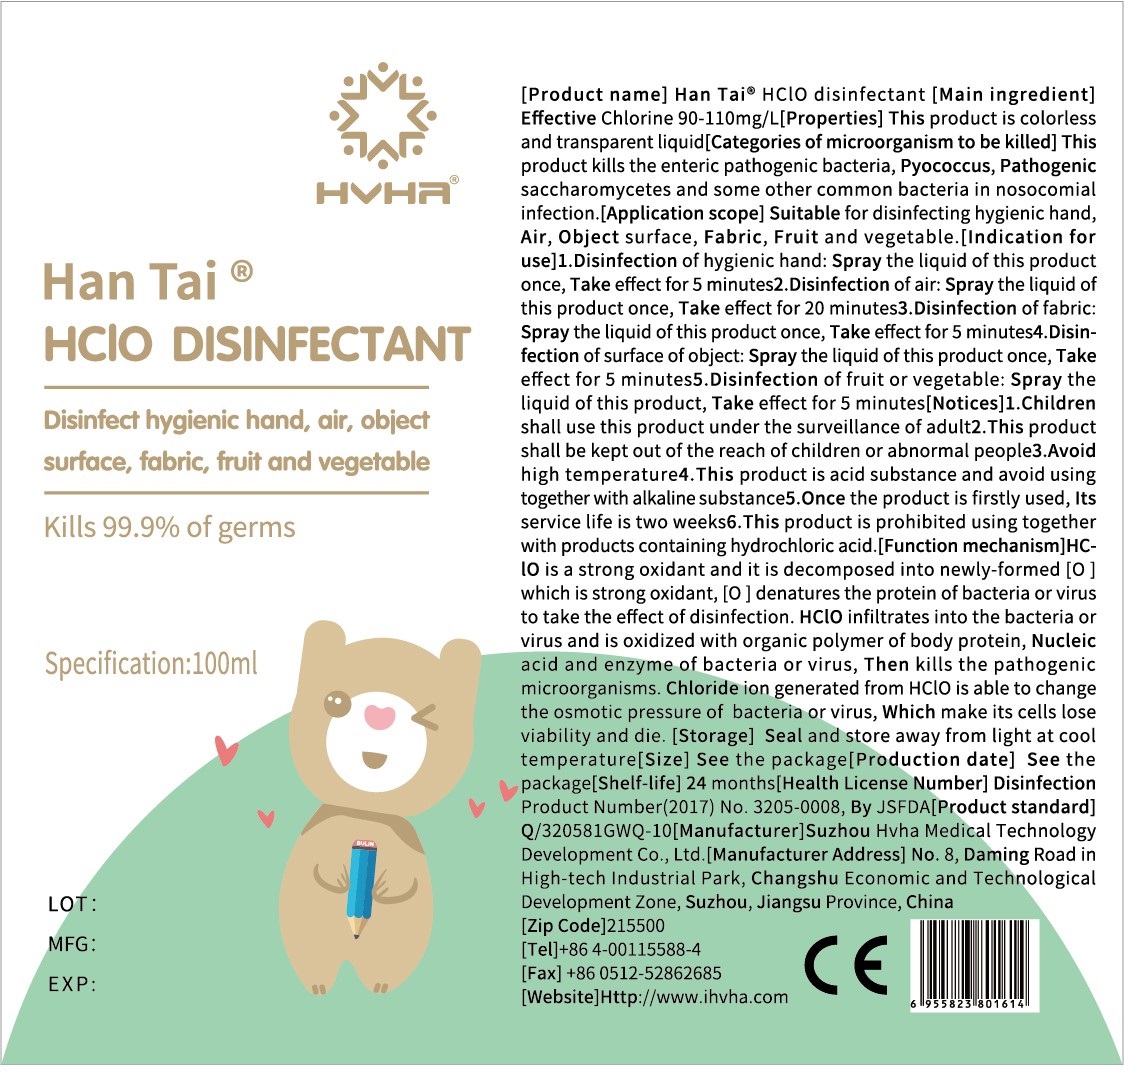 HClO disinfectant 100ml 77263-001-02 label